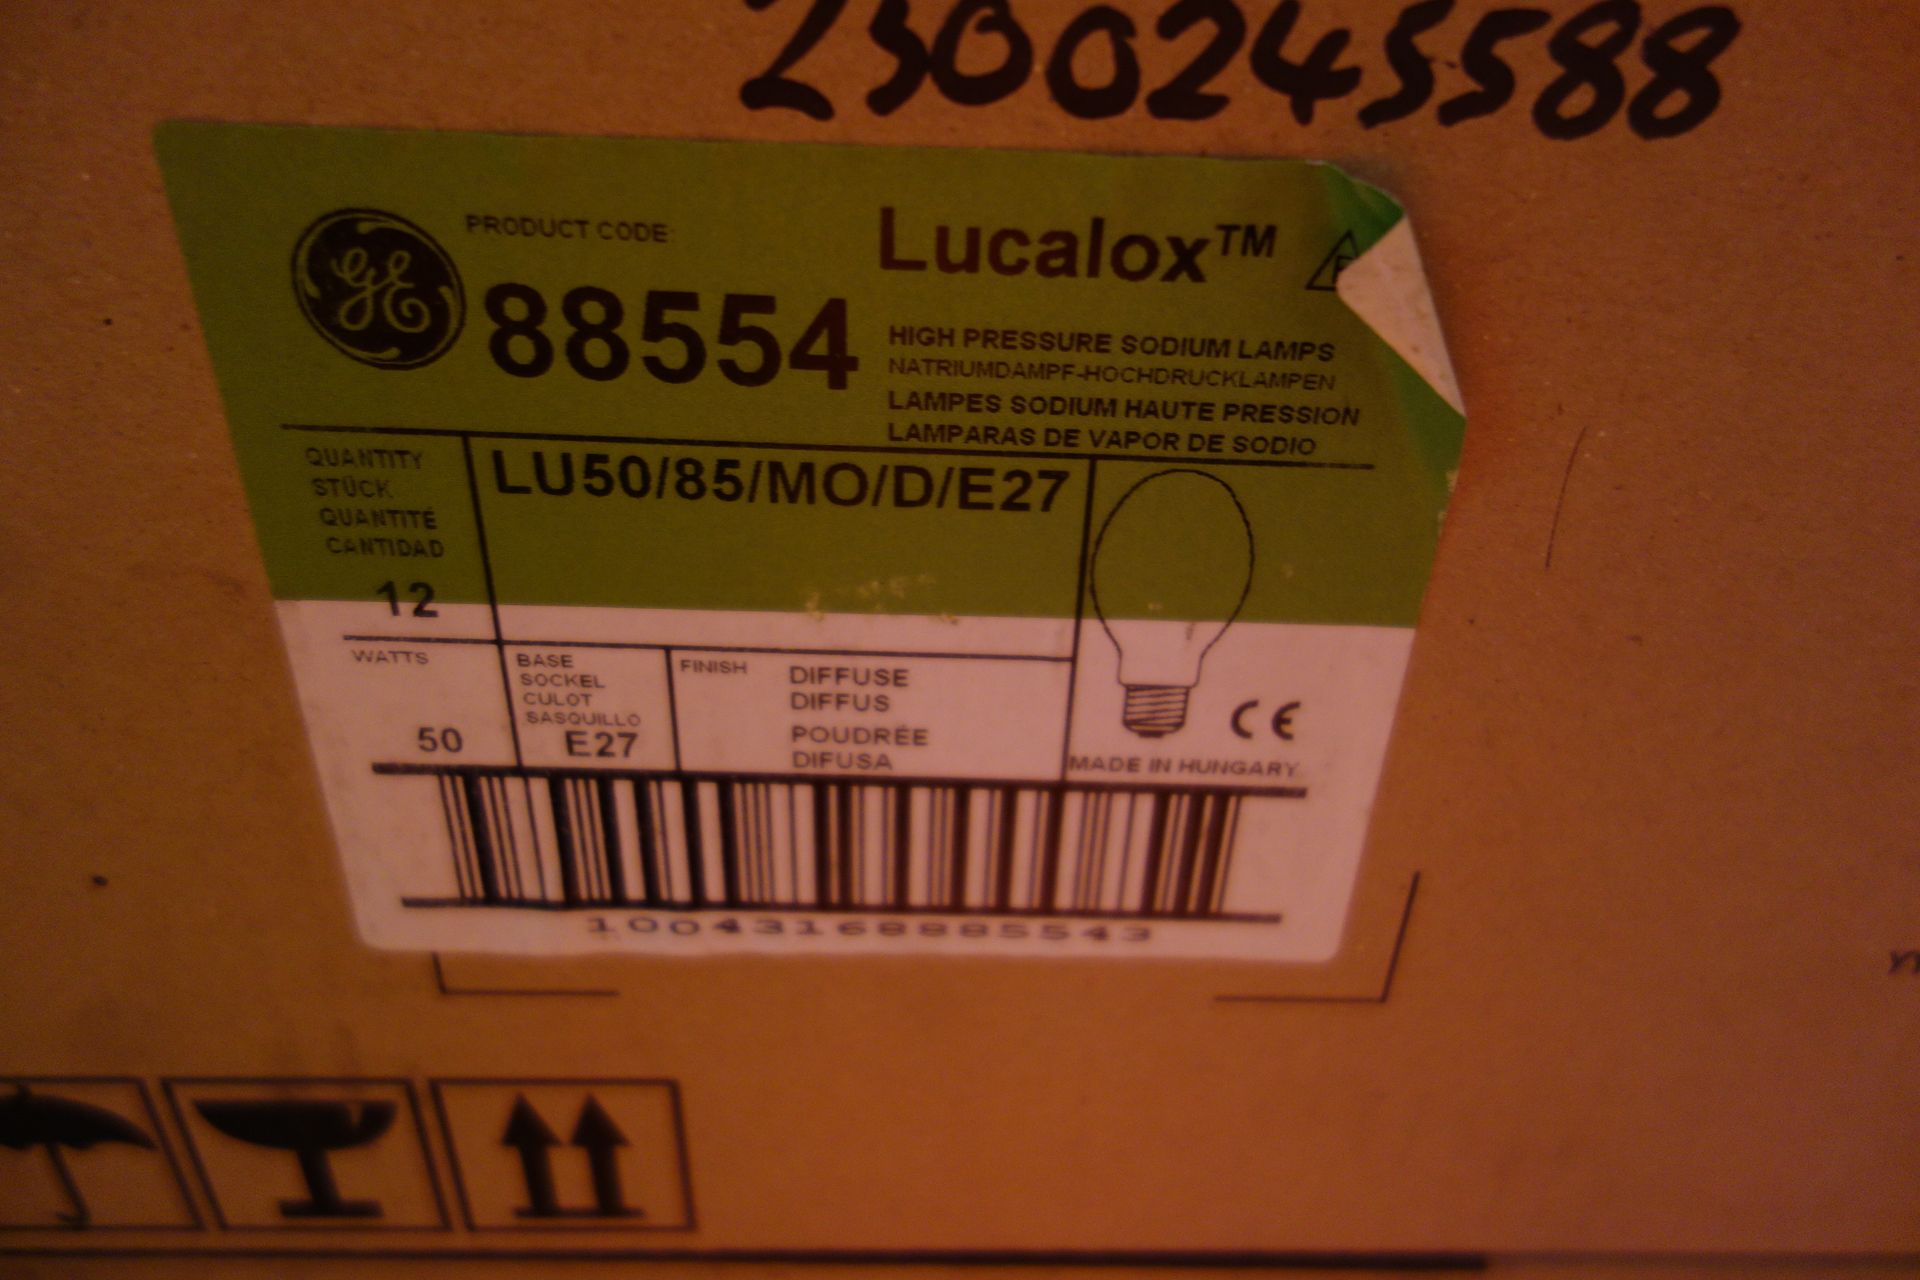 23 X General Electric 88554 Lucalox High Pressure Sodium Lamps 50W E27 Fitting + 12 X 45696